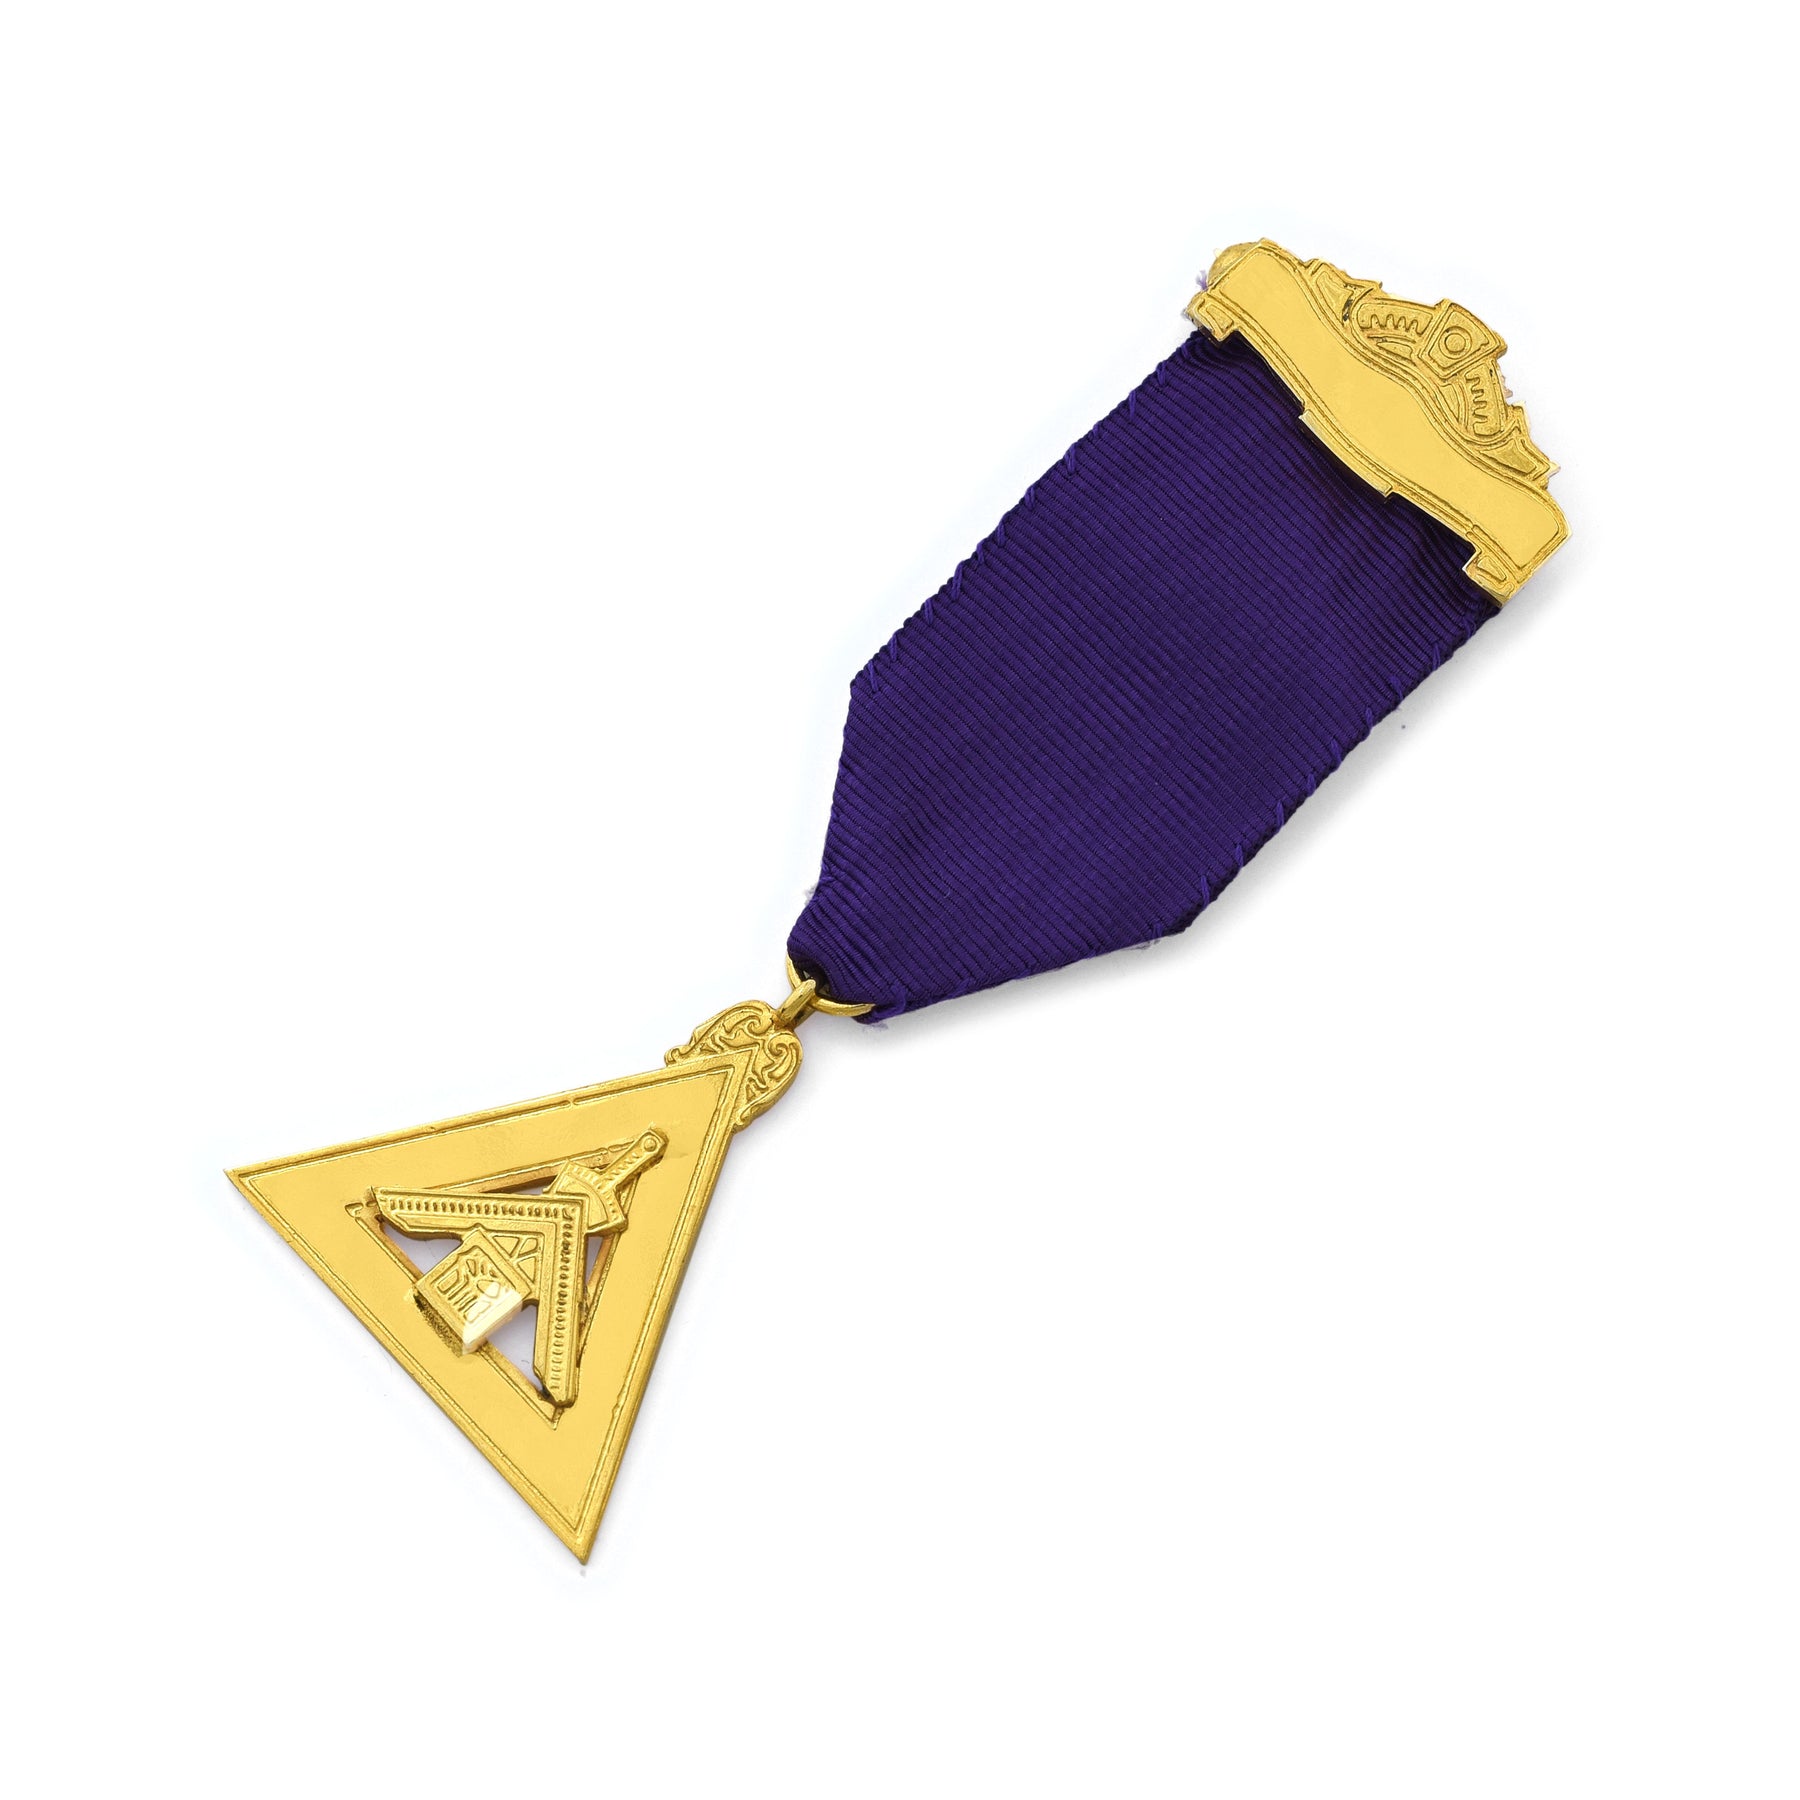 Illustrious Master Council Breast Jewel - Purple Ribbon Gold Plated - Bricks Masons